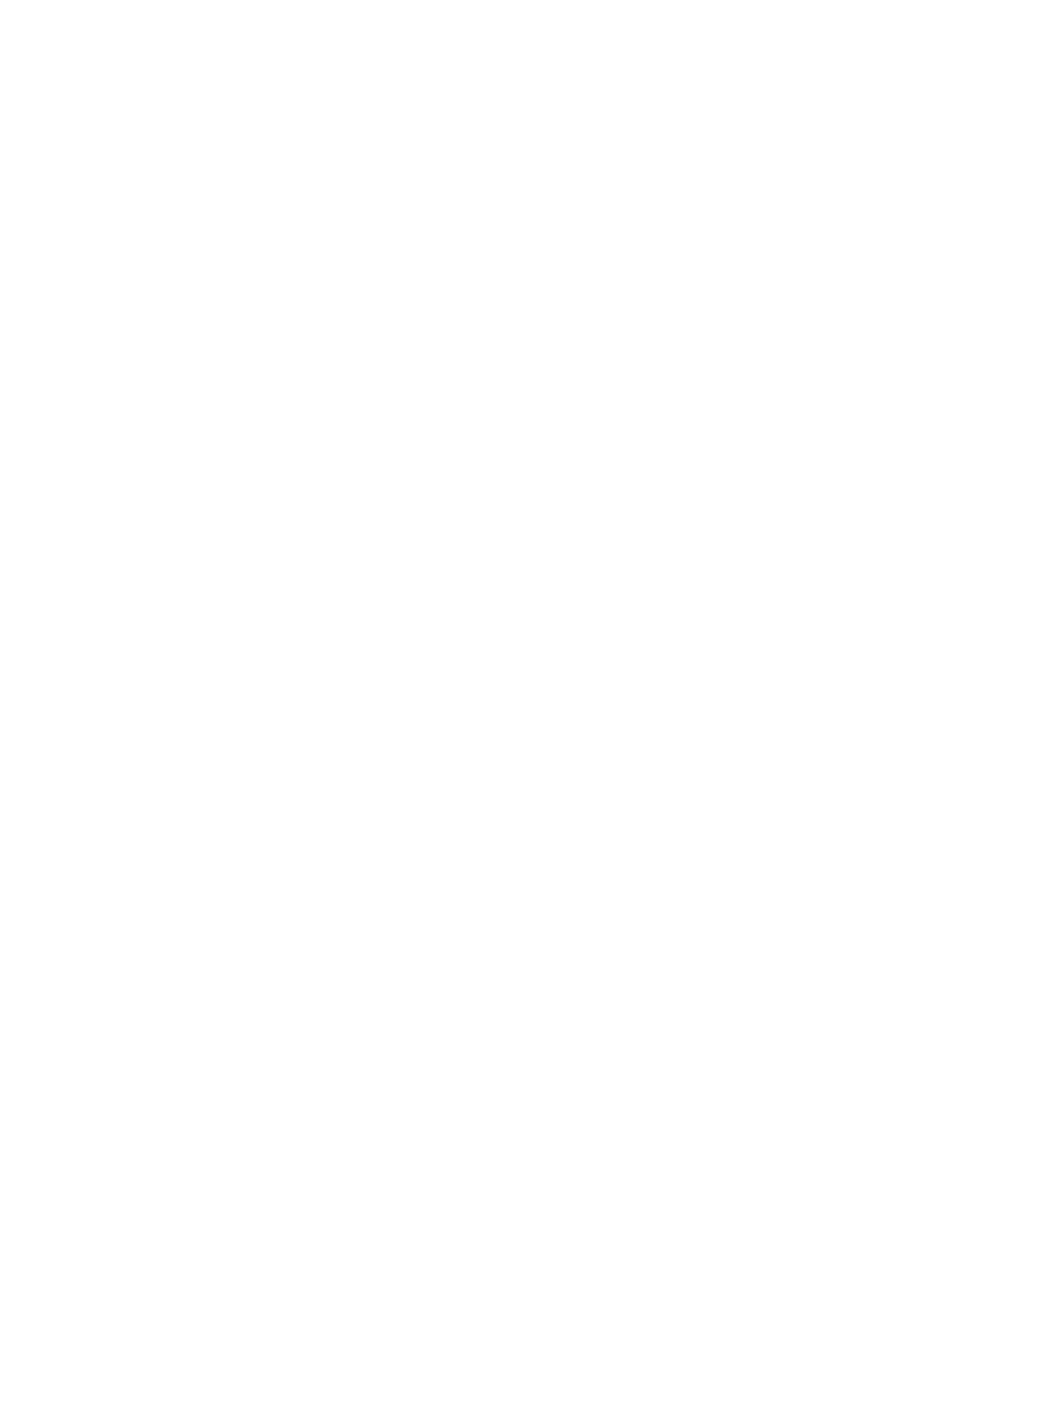 LMNOP - Creative and Branding Agency